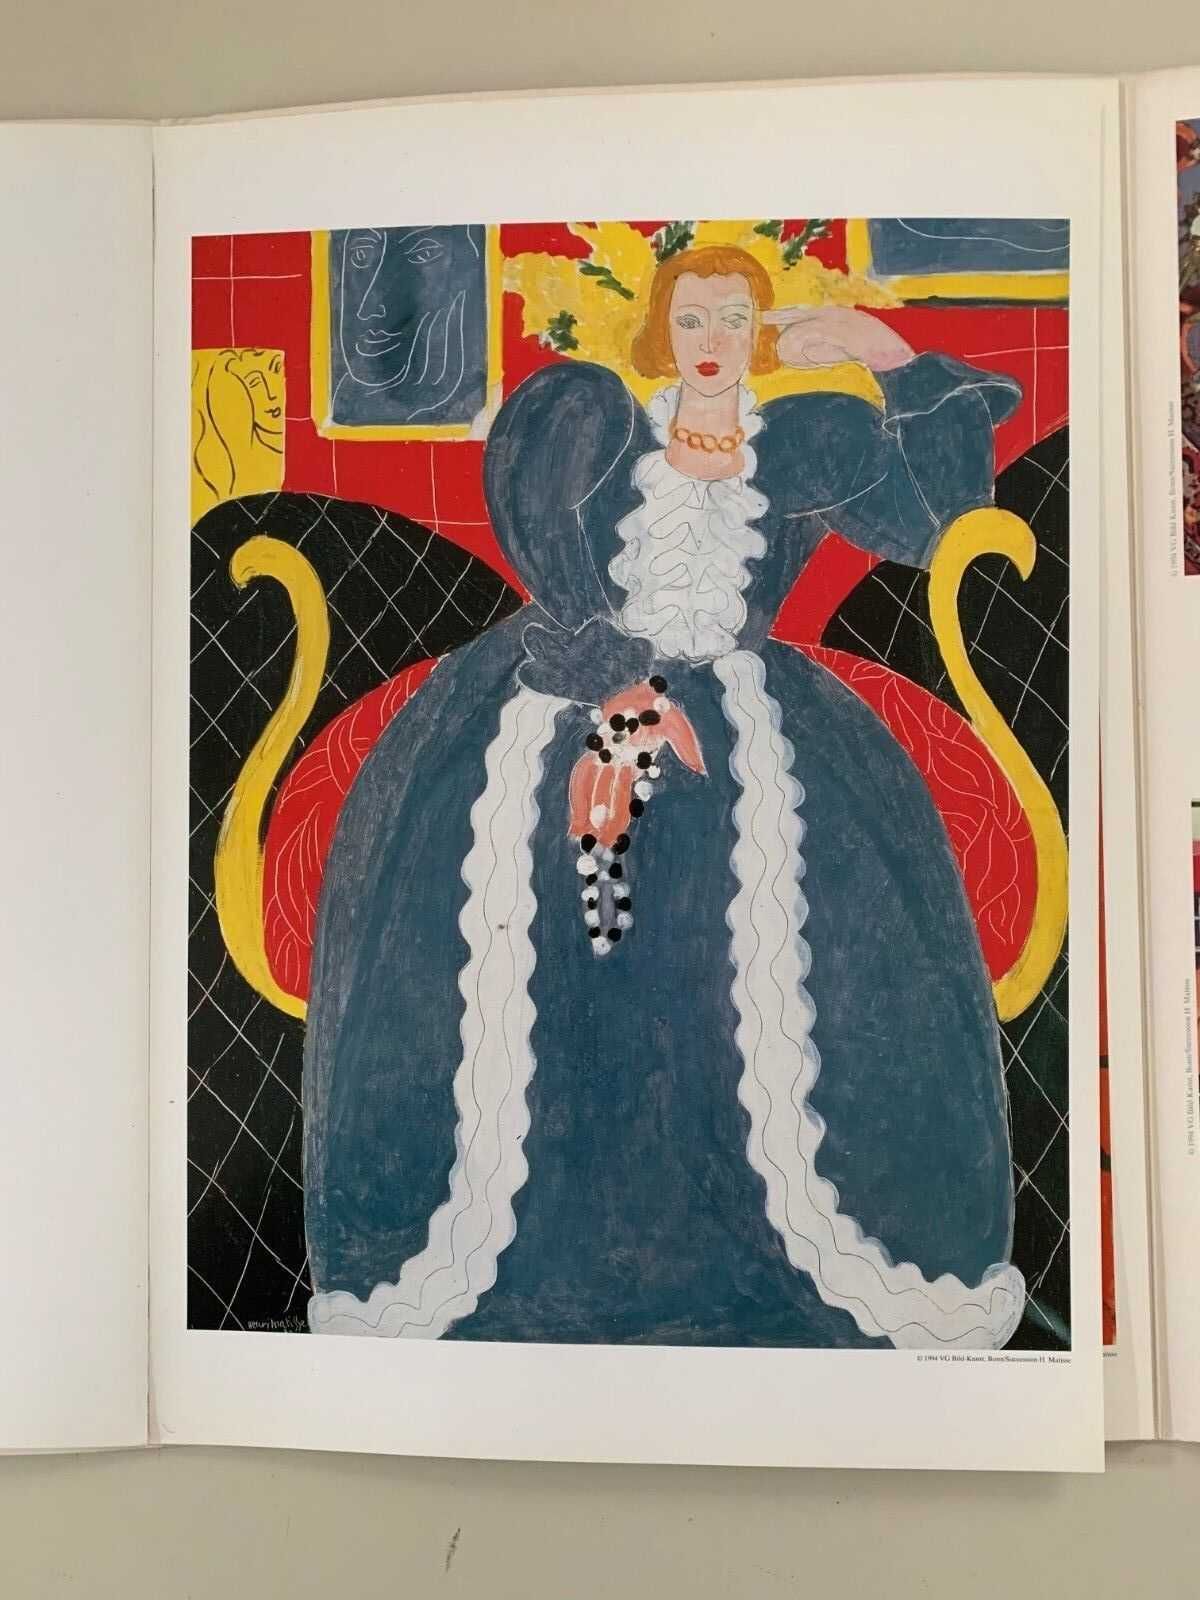 Matisse 1994 Taschen Poster Book: conjunto raro 6 posters 31x44cm